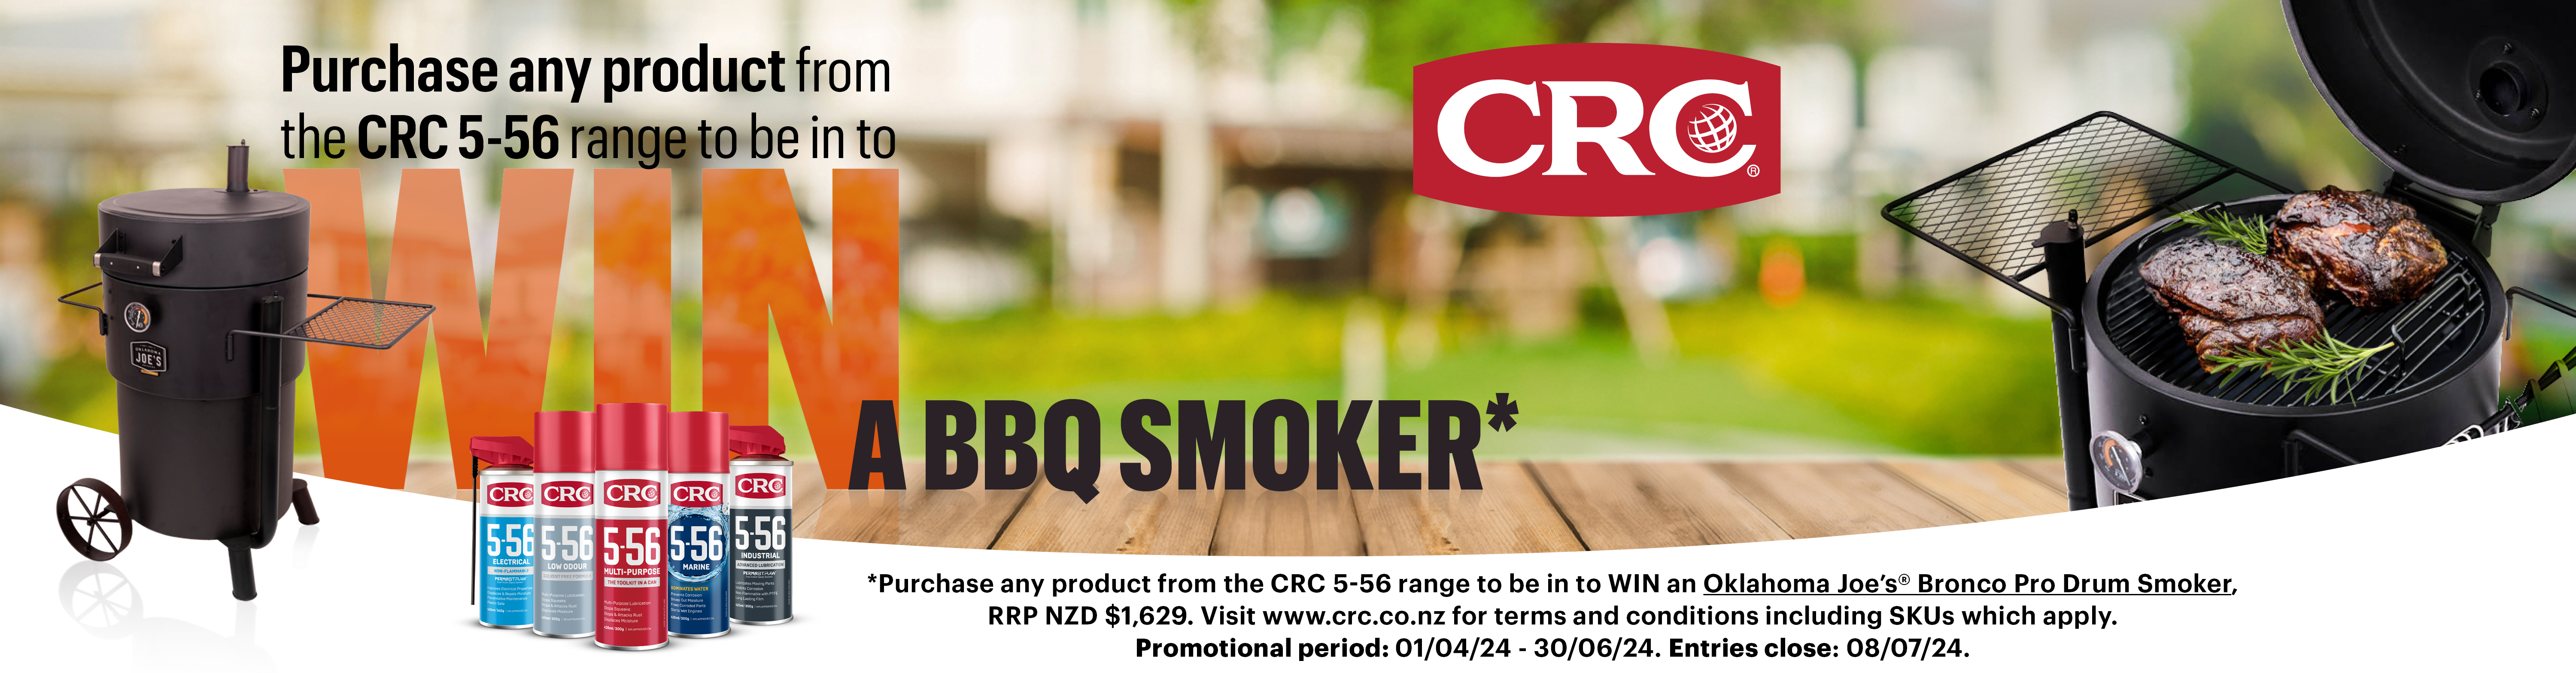 CRC BBQ Smoker